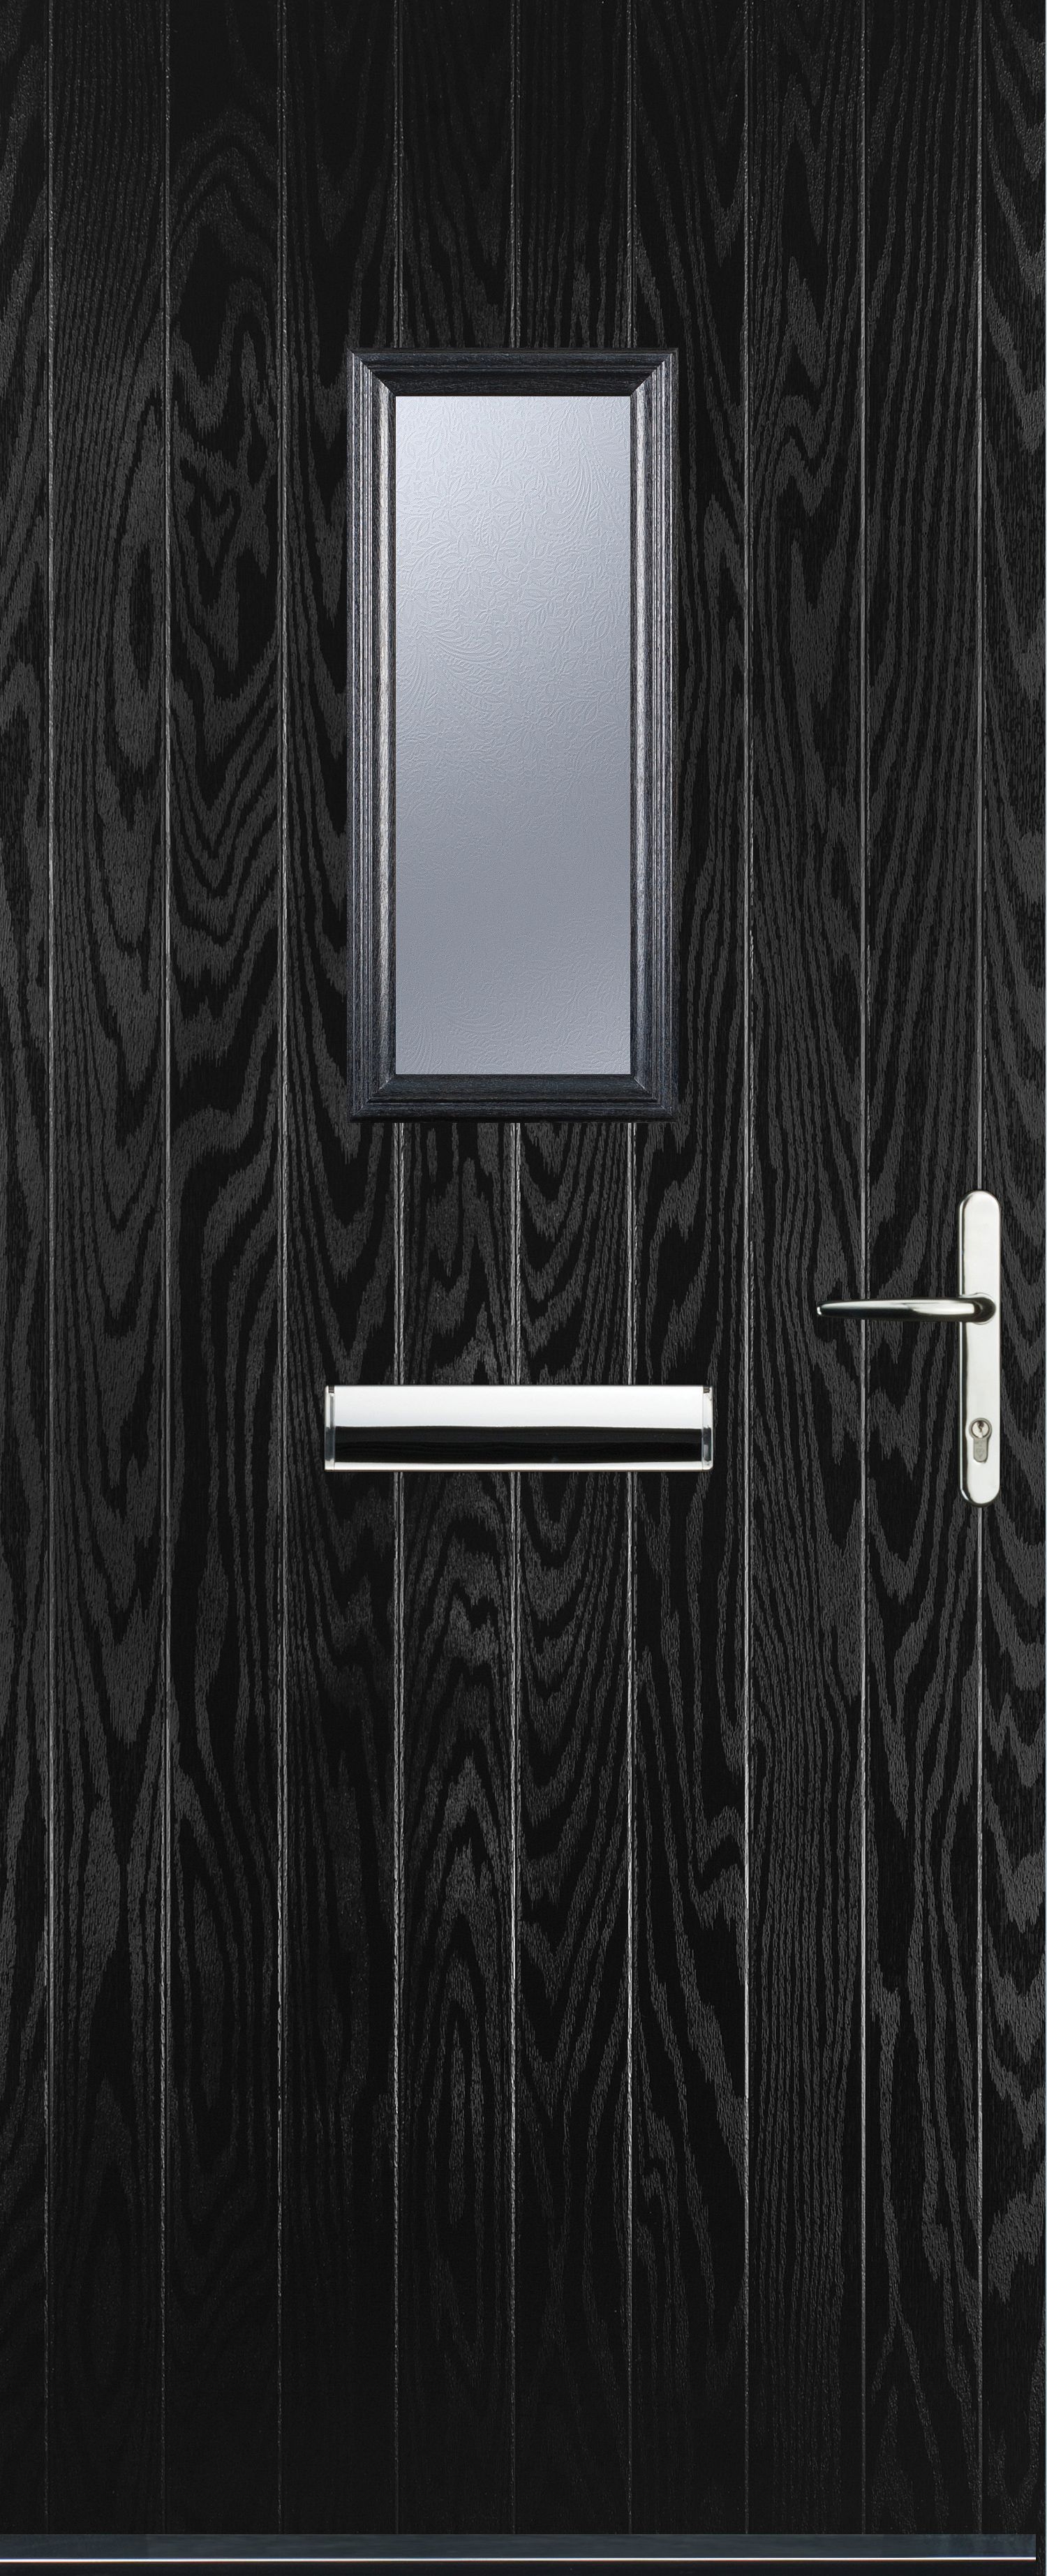 Image of Euramax 1 Square Left Hand Black Composite Door - 920 x 2100mm